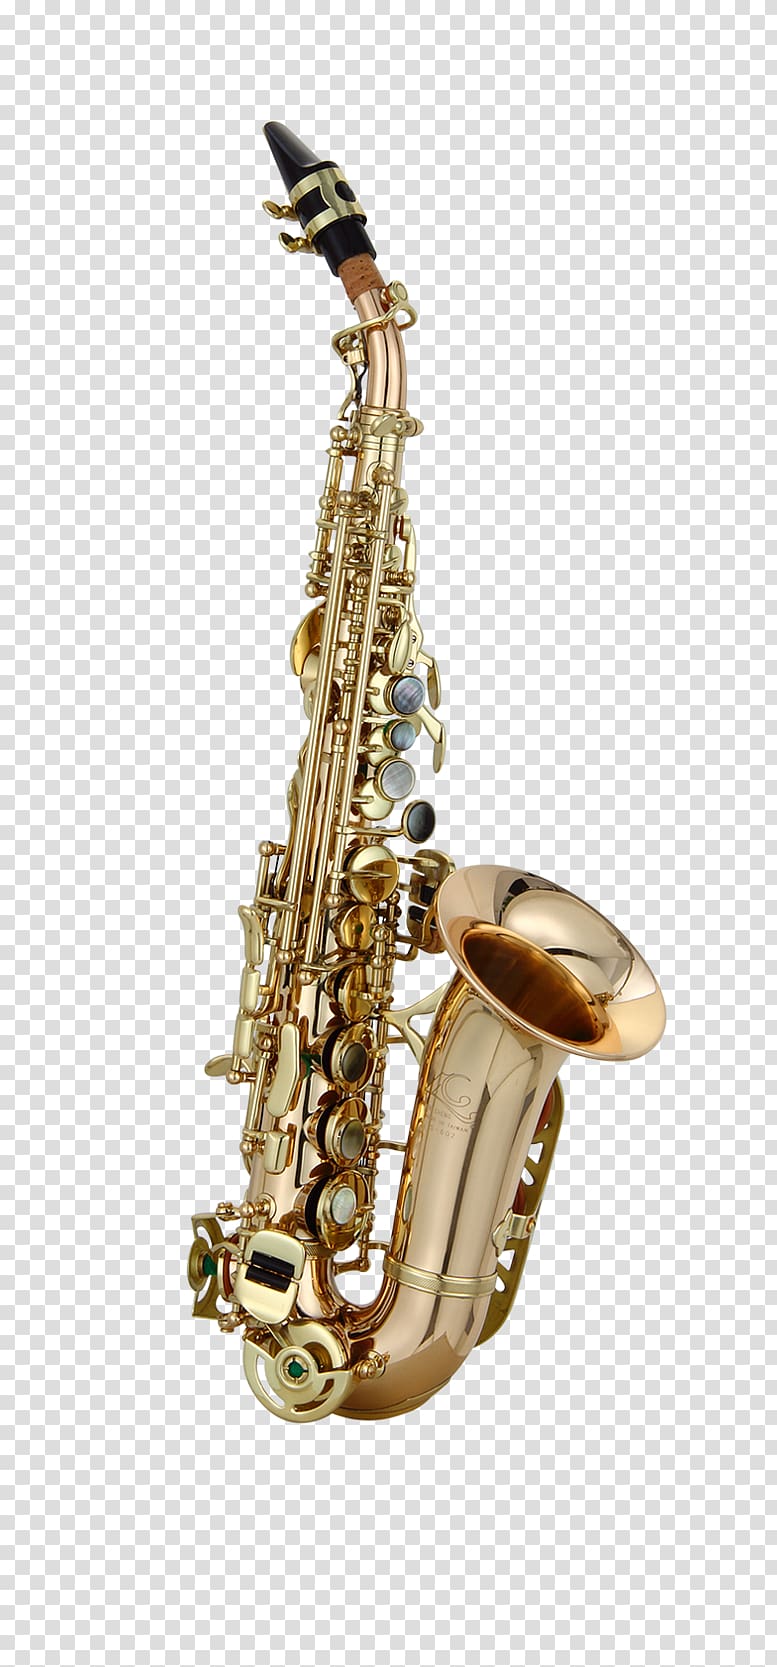 Baritone saxophone Chang Lien-cheng Saxophone Museum Soprano saxophone Alto saxophone, saxophone transparent background PNG clipart